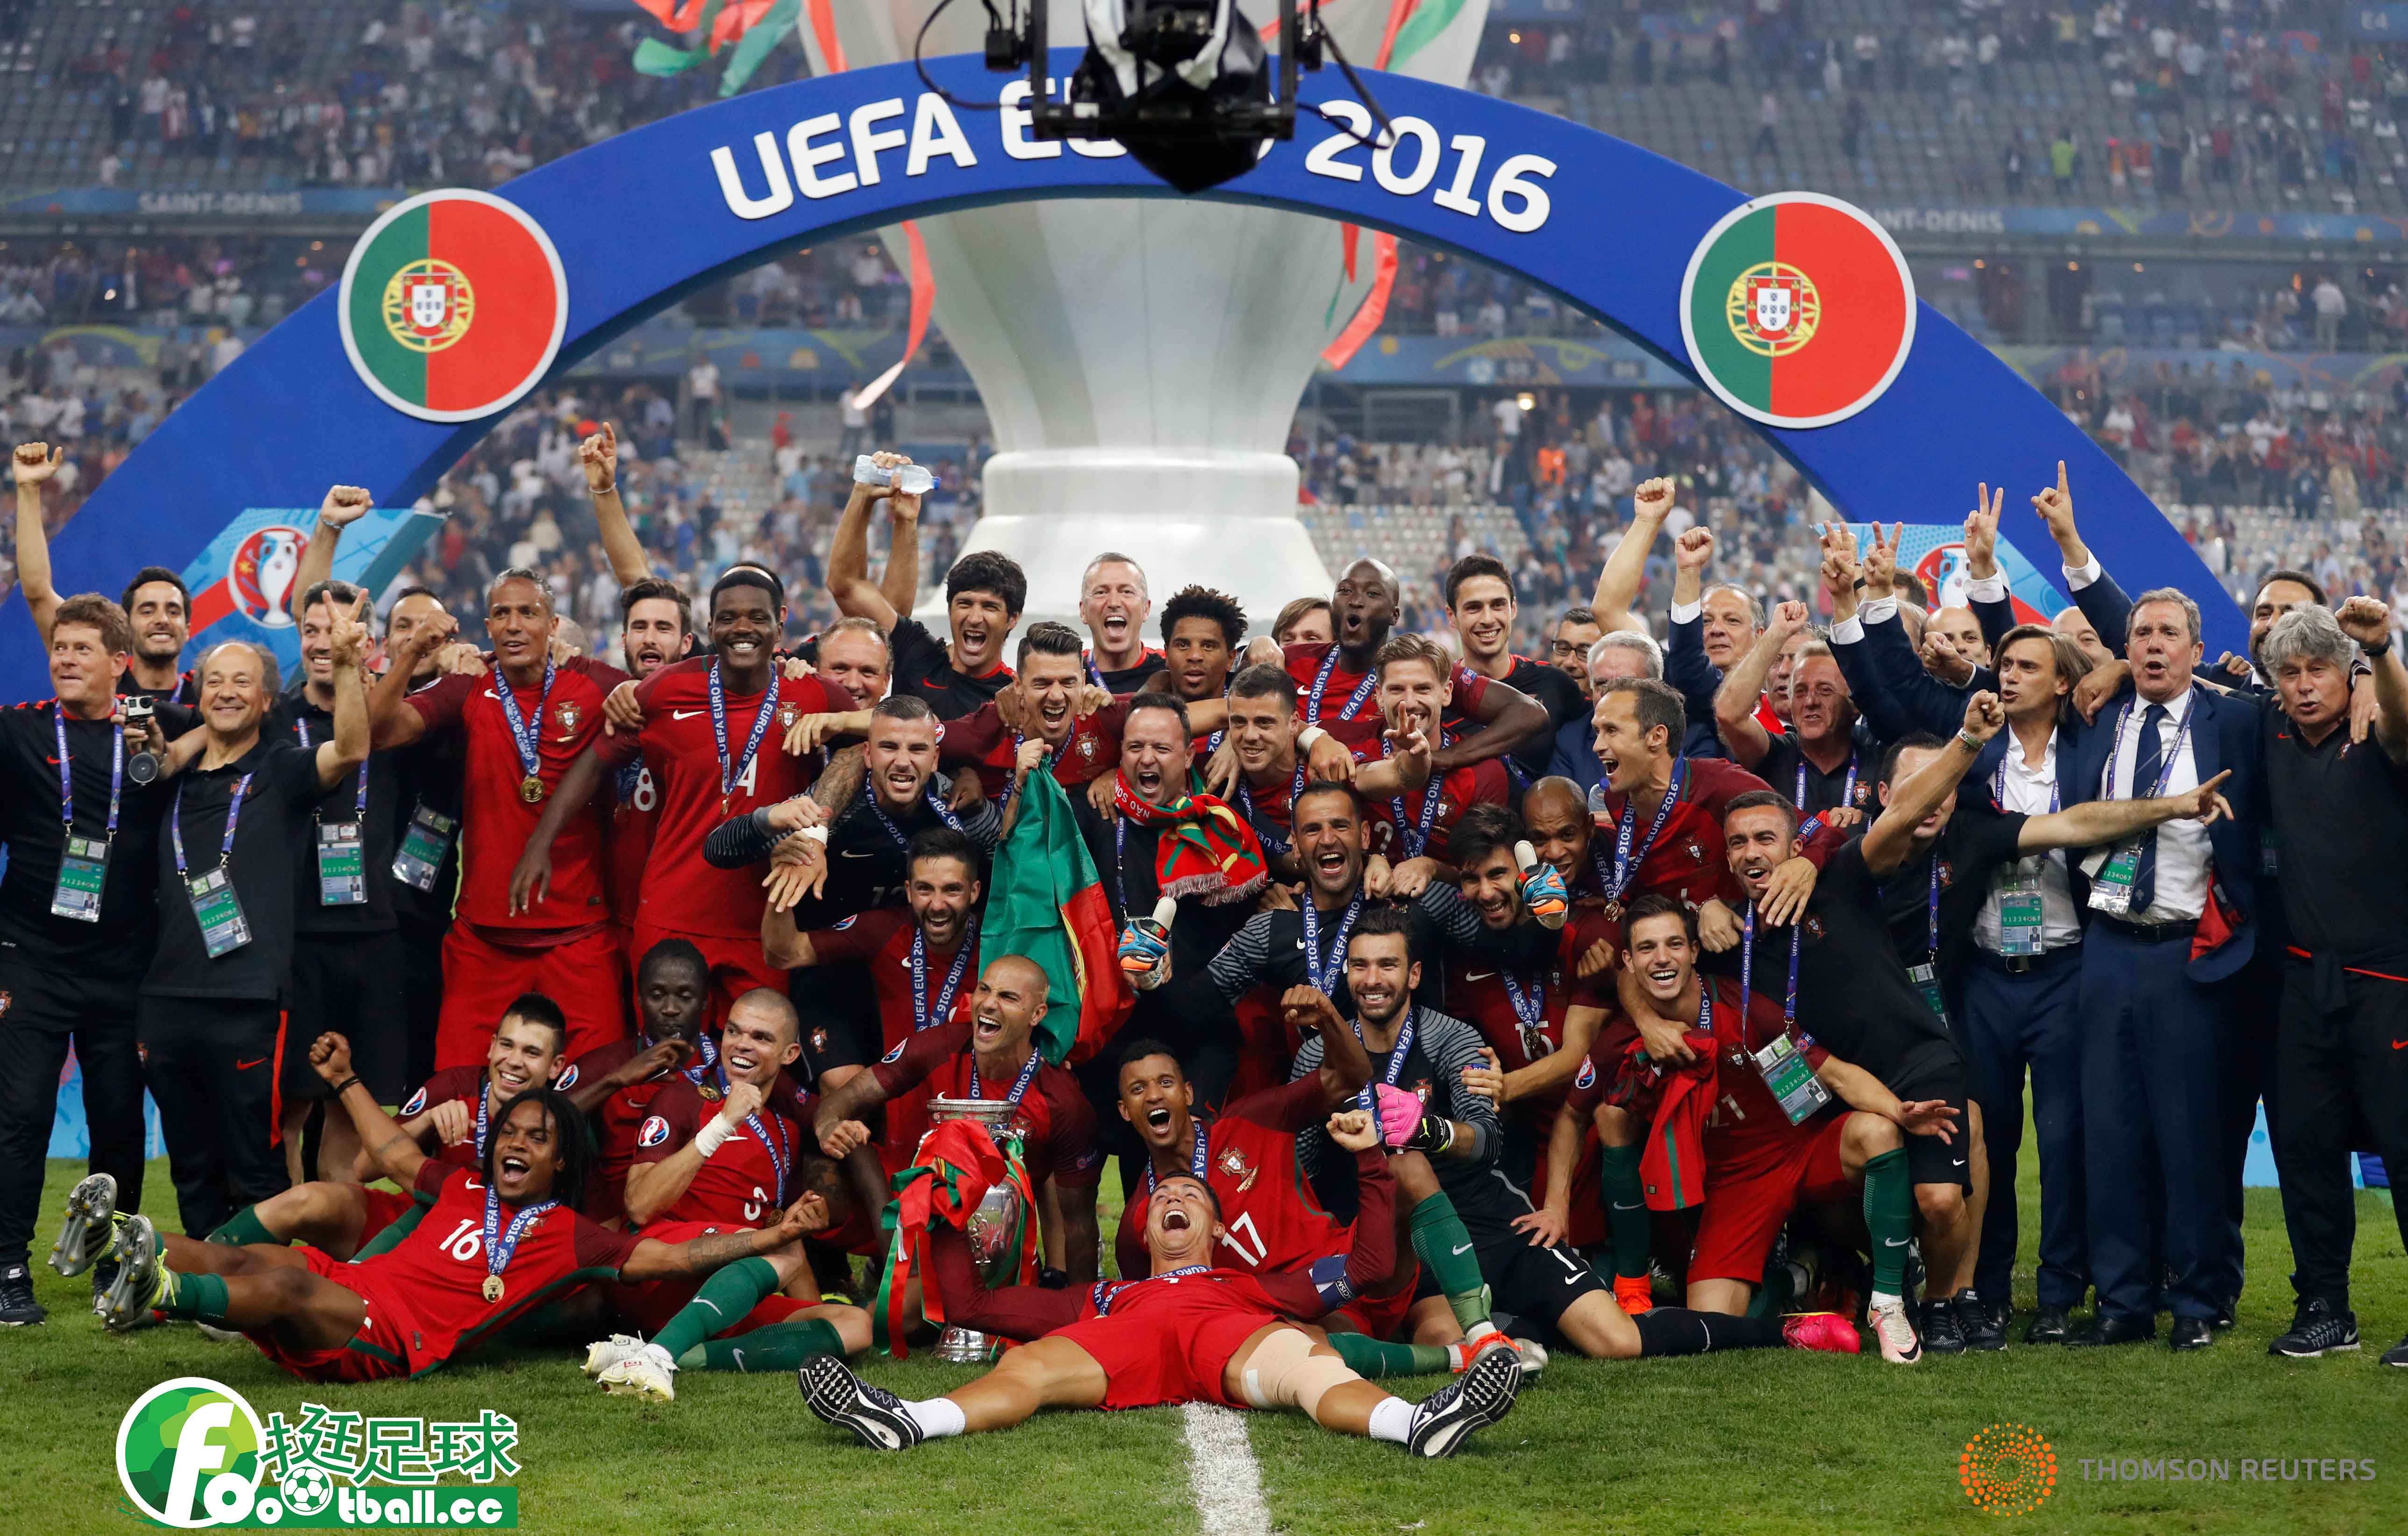 Кубок футбола 2016. Португалия выиграла евро 2016. Португалия чемпион Европы по футболу 2016. Португалия чемпион Европы 2016. Победа Португалии на евро 2016.